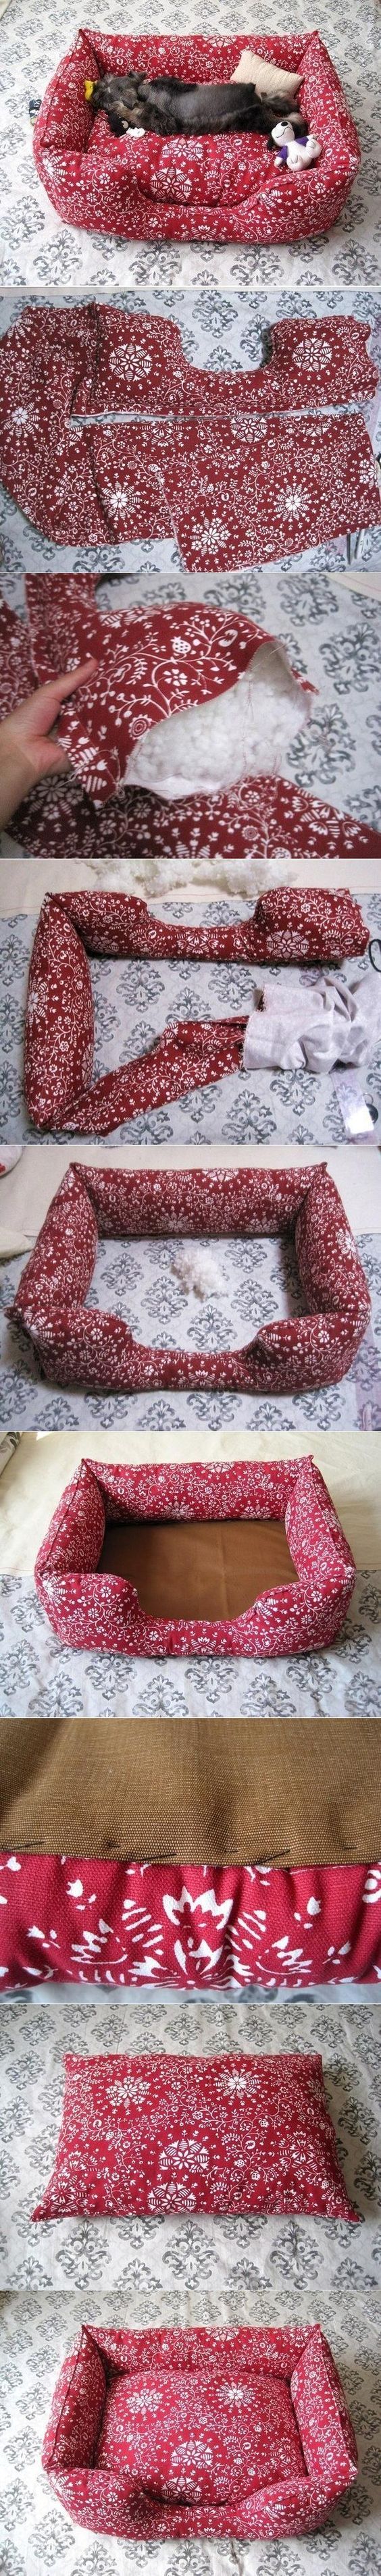 DIY Fabric Pet Sofa. 